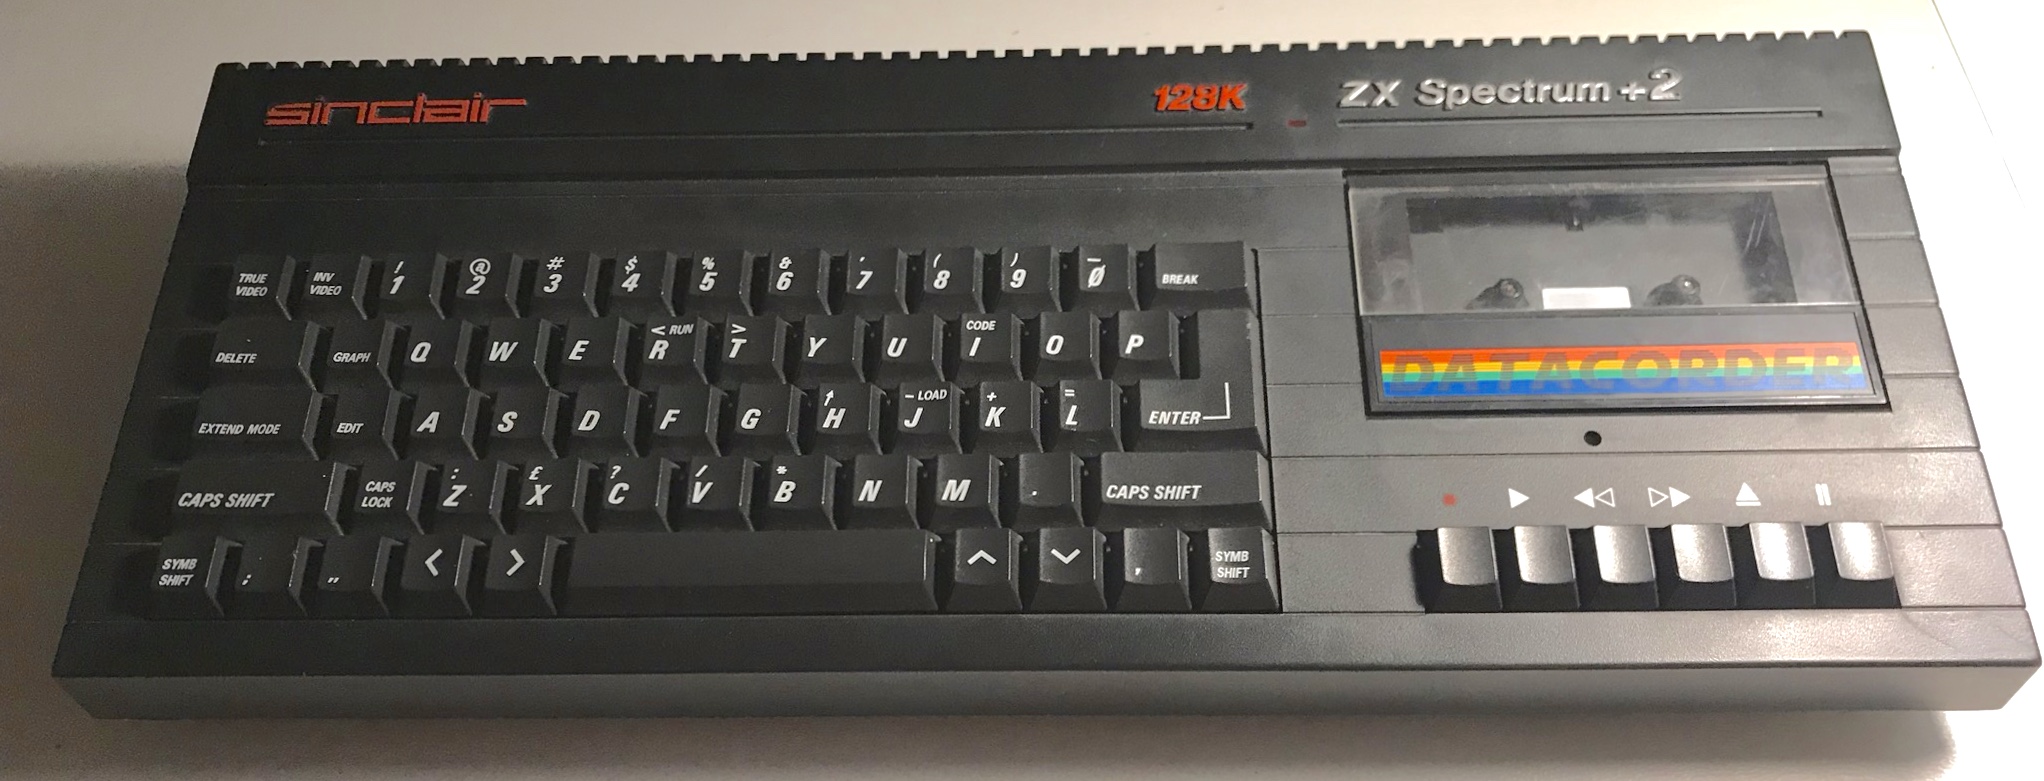 ZX Spectrum +2A – Old Crap Vintage Computing